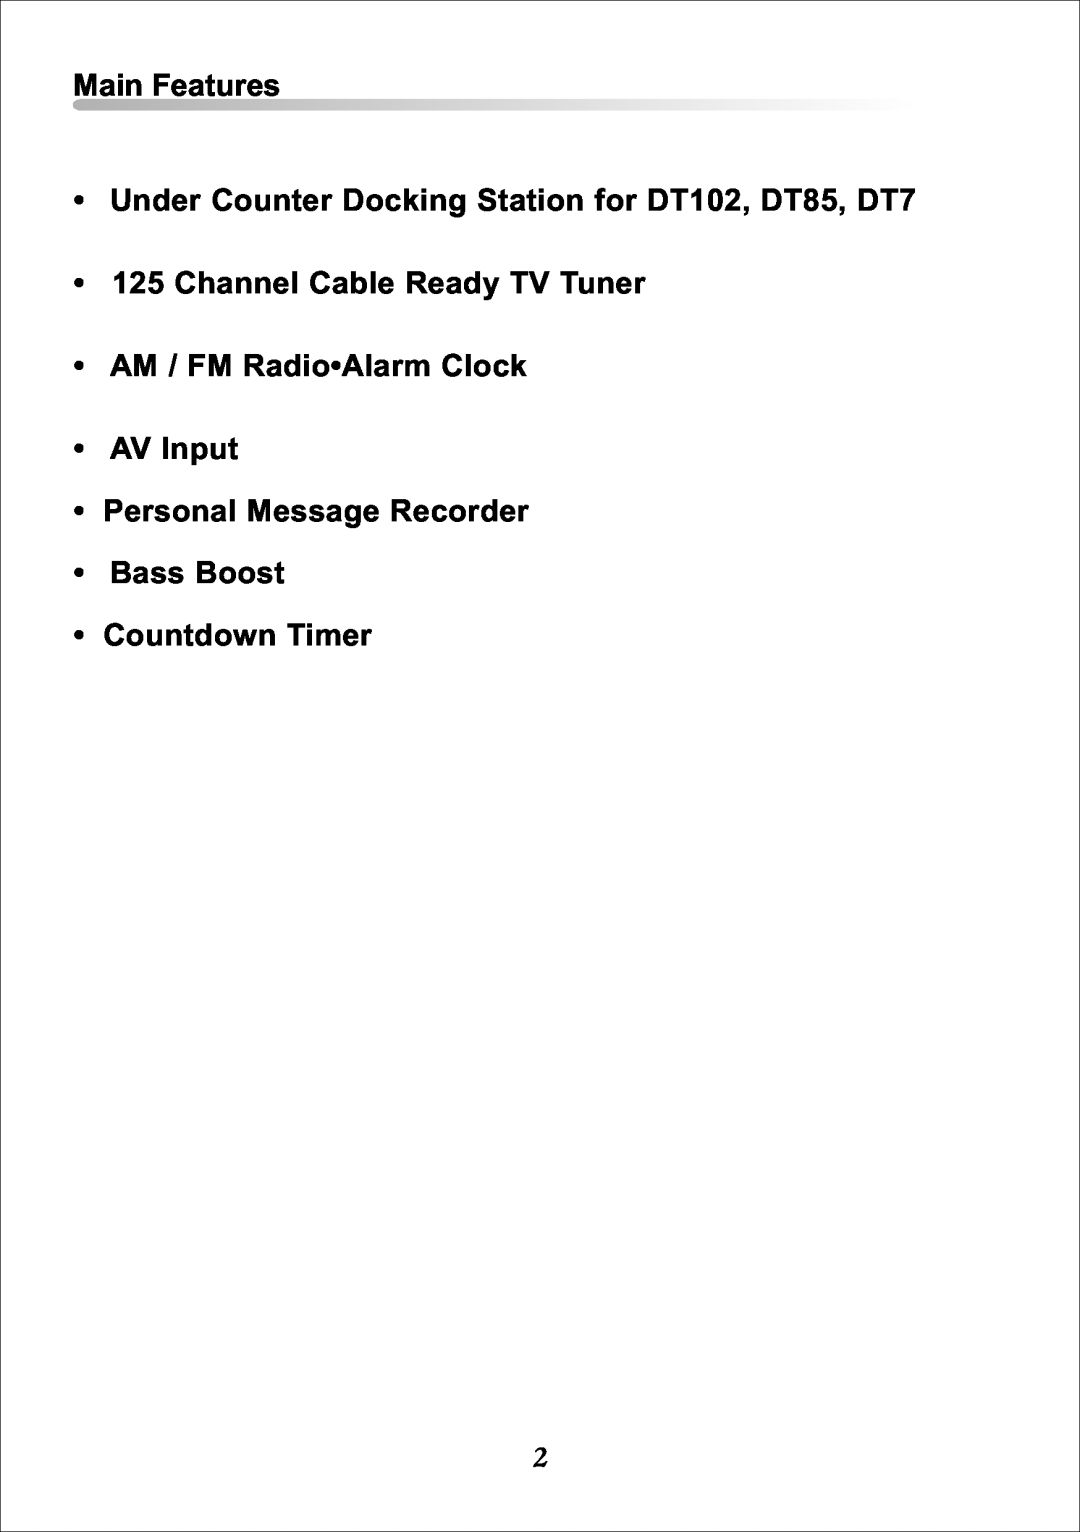 Audiovox DKP102 Main Features, Channel Cable Ready TV Tuner, AM / FM RadioAlarm Clock AV Input, Countdown Timer 